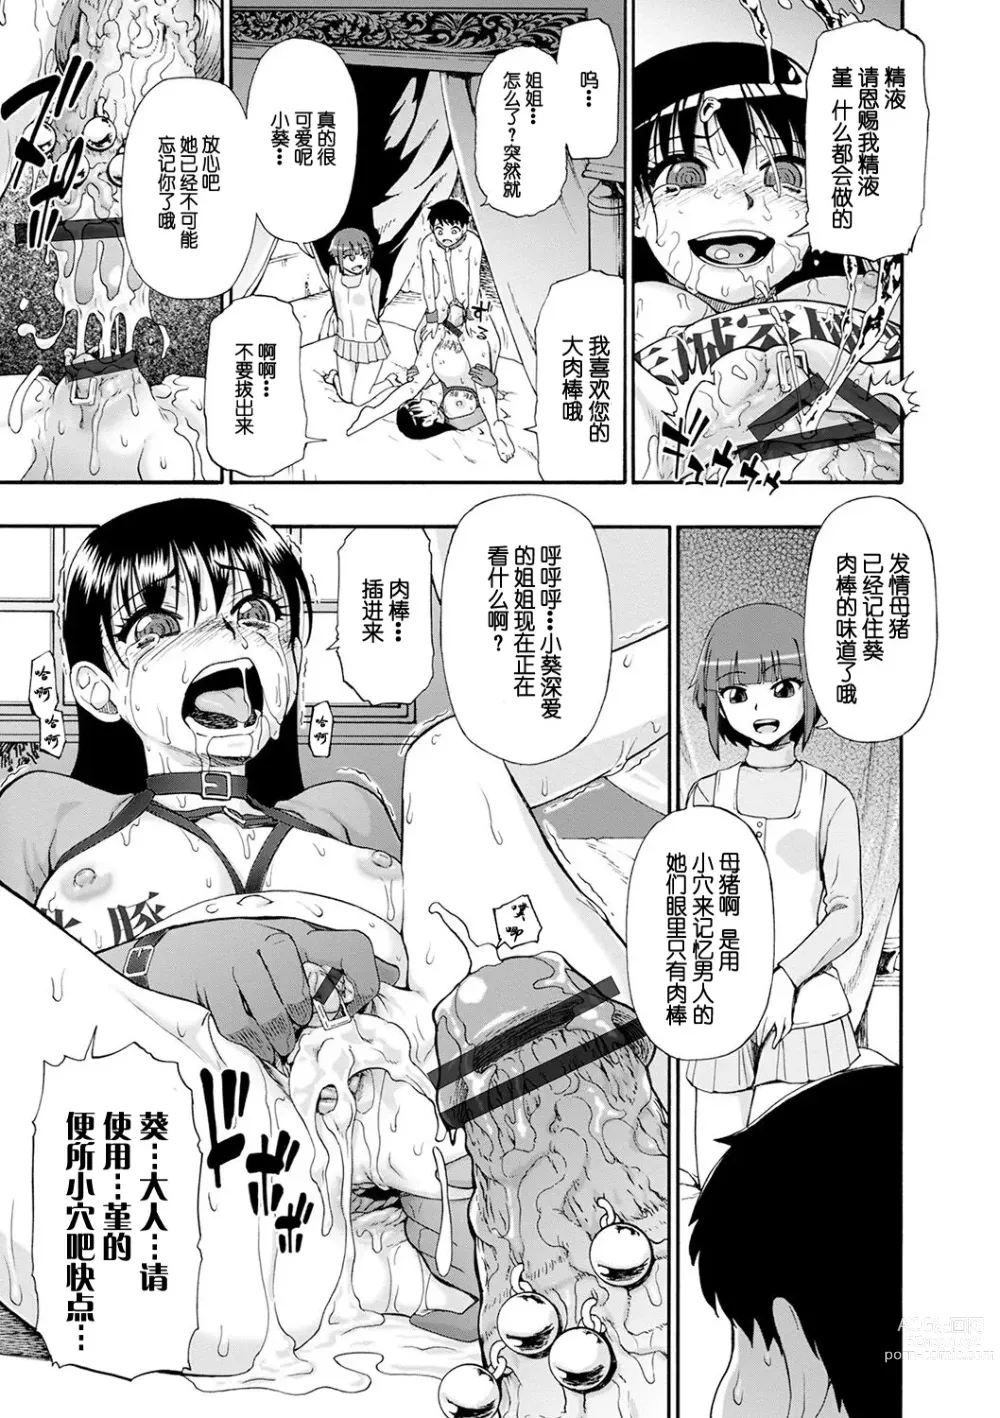 Page 193 of manga Chikushou Bara - The Chikushou Bara